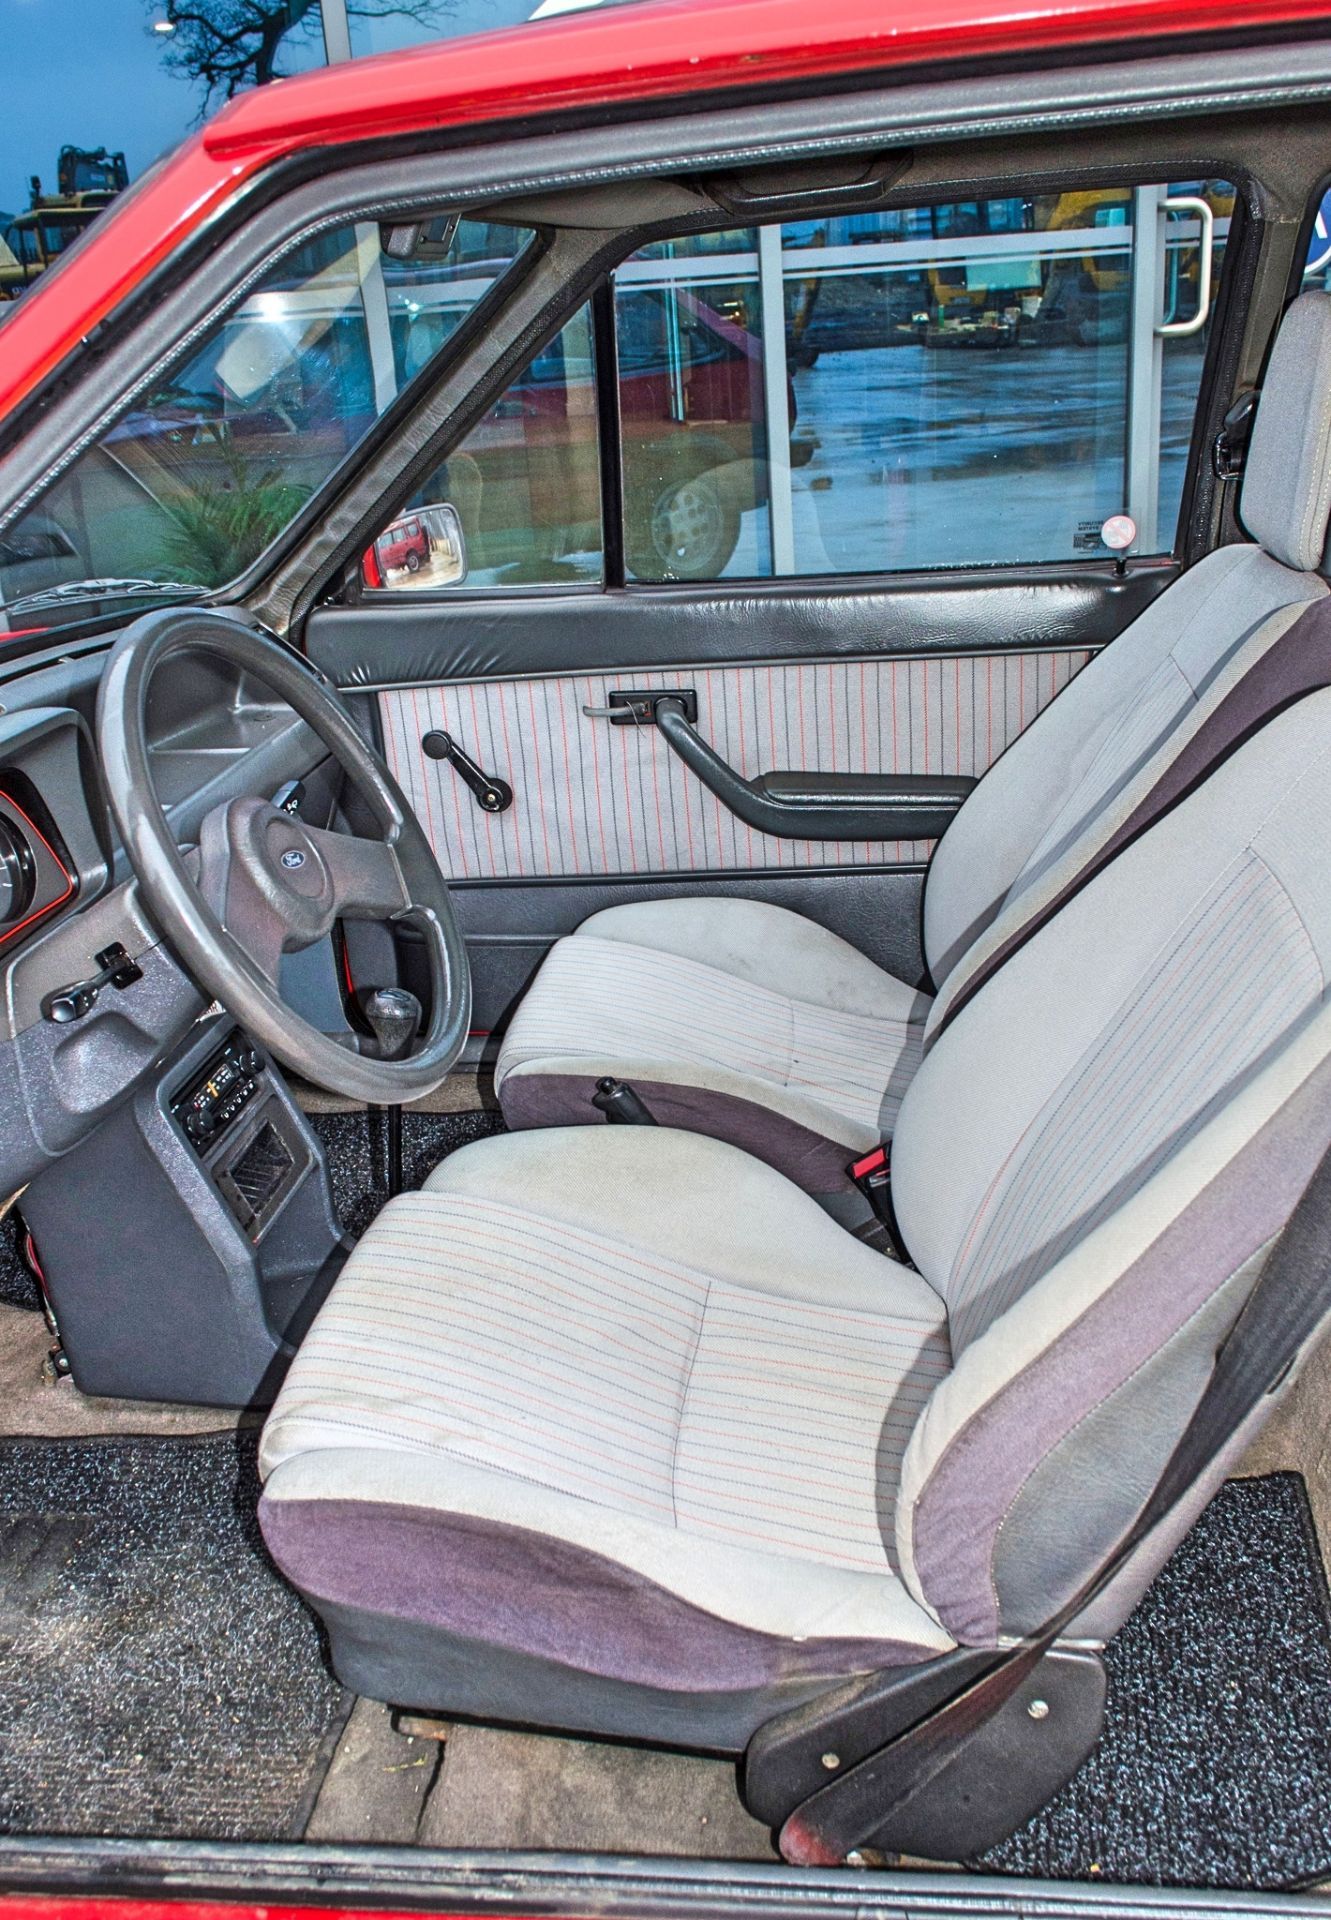 1983 Ford Fiesta XR2 1600cc 3 door hatchback - Image 27 of 47